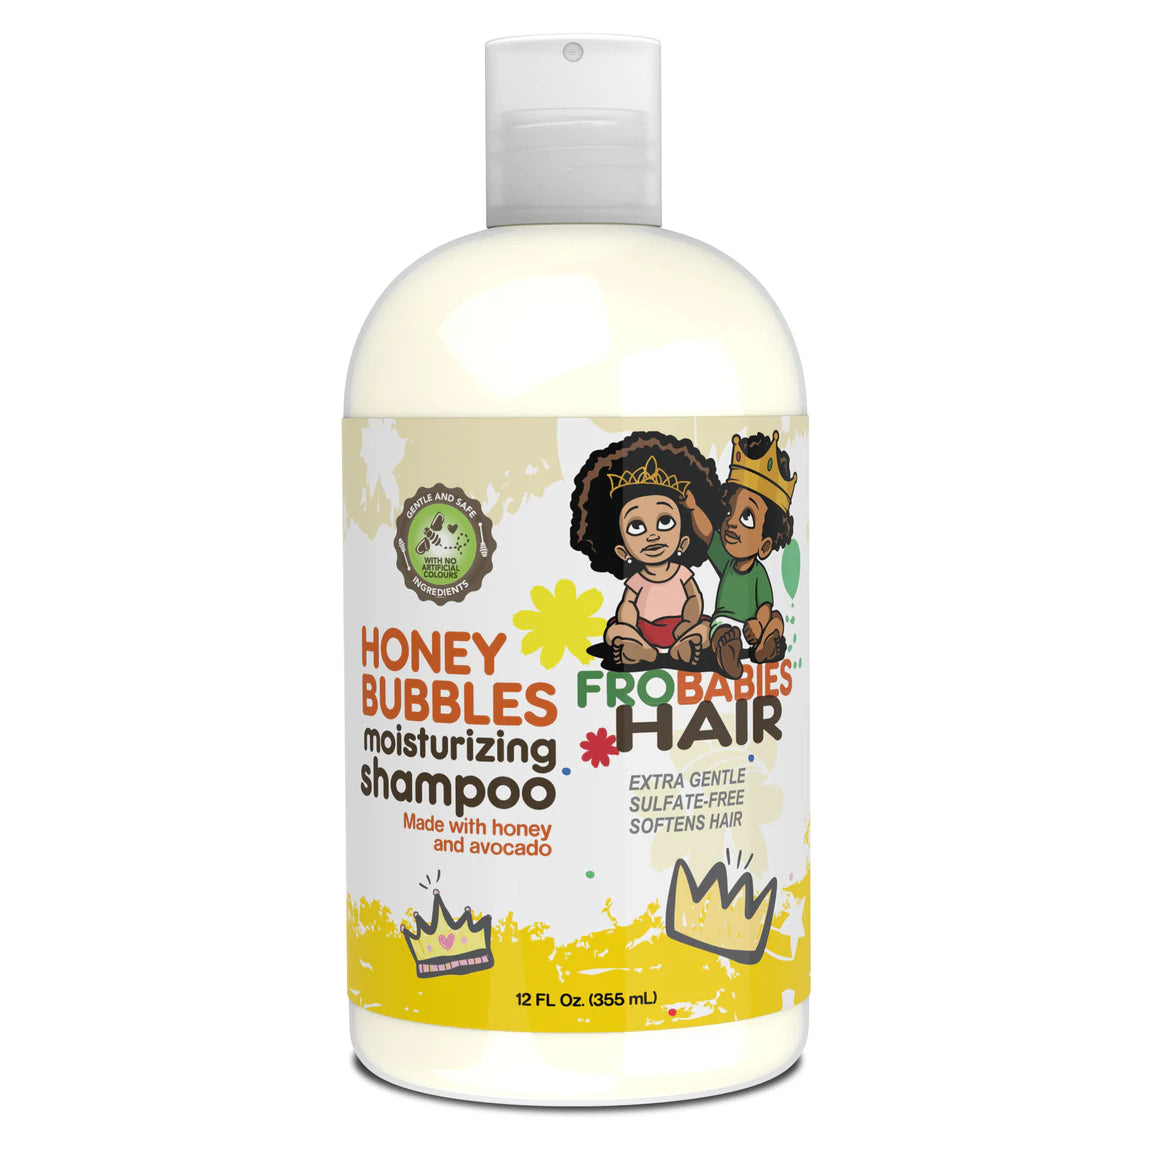 FroBabies Honey Bubbles Moisturizing Shampoo 12oz - Sfbeautybar